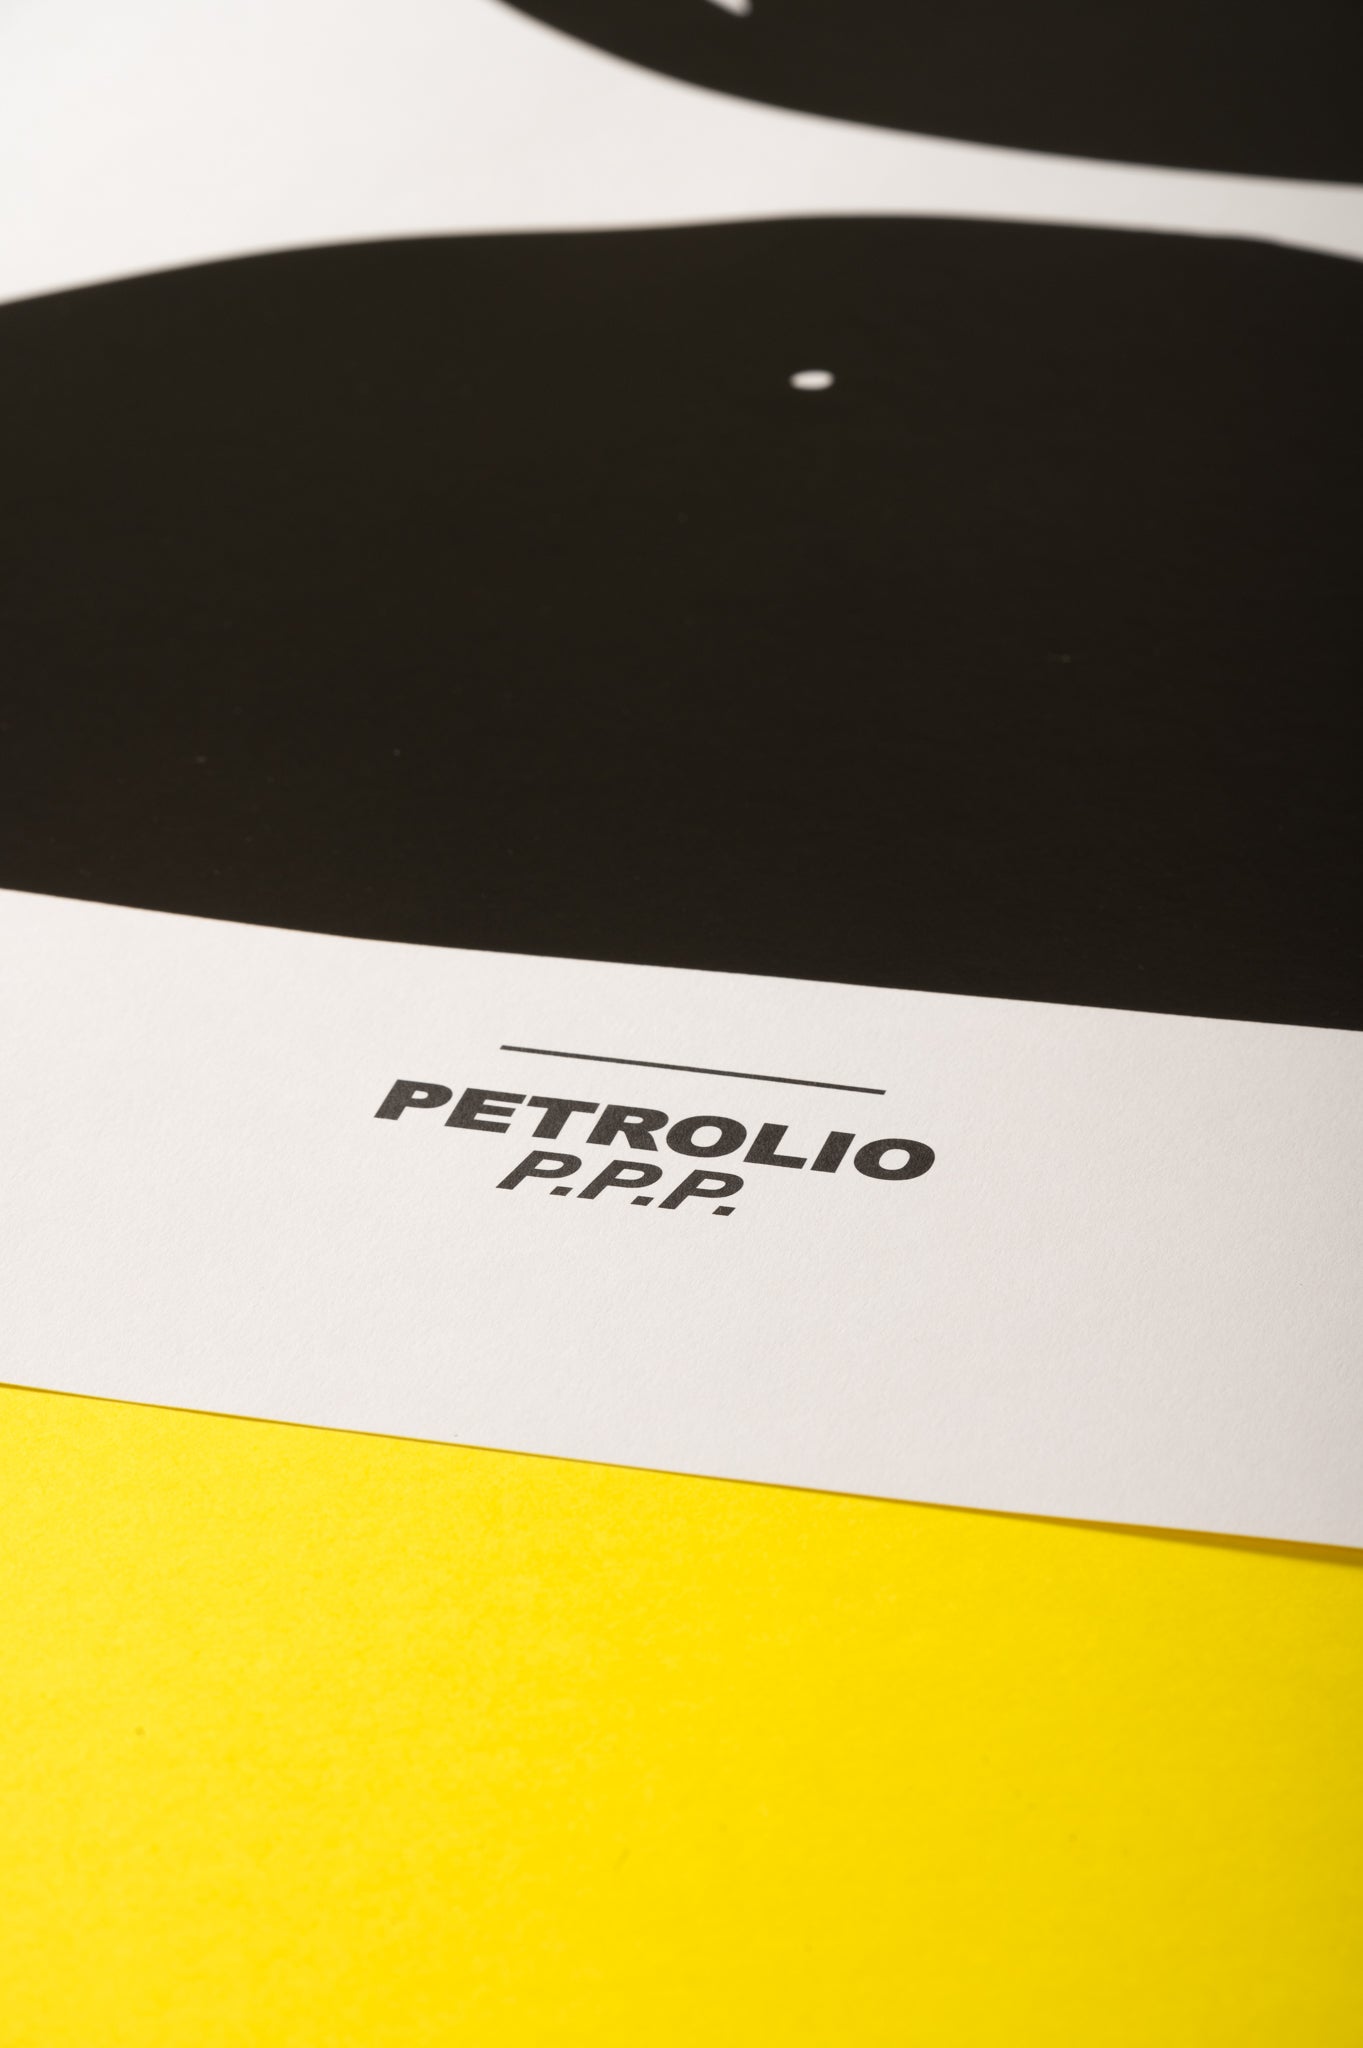 Poster Petrolio, Pier Paolo Pasolini manifesto